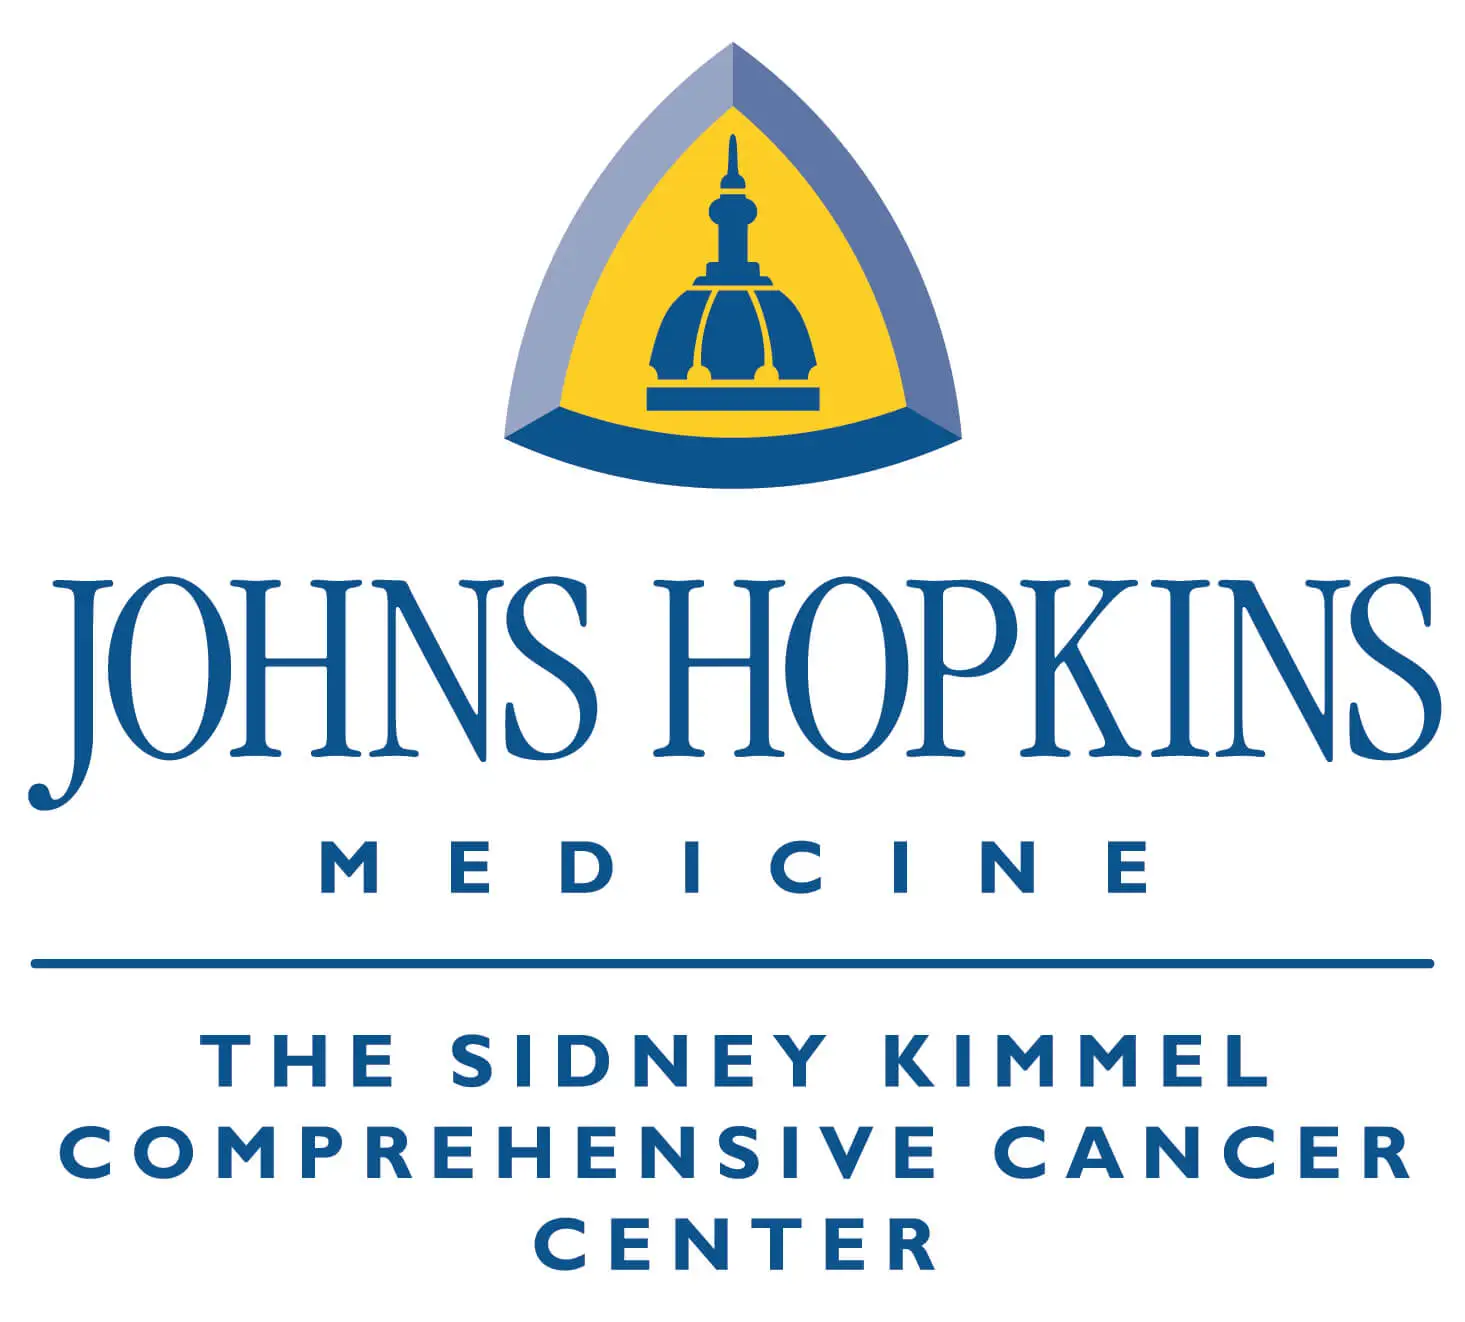 Johns Hopkins Medicine logo